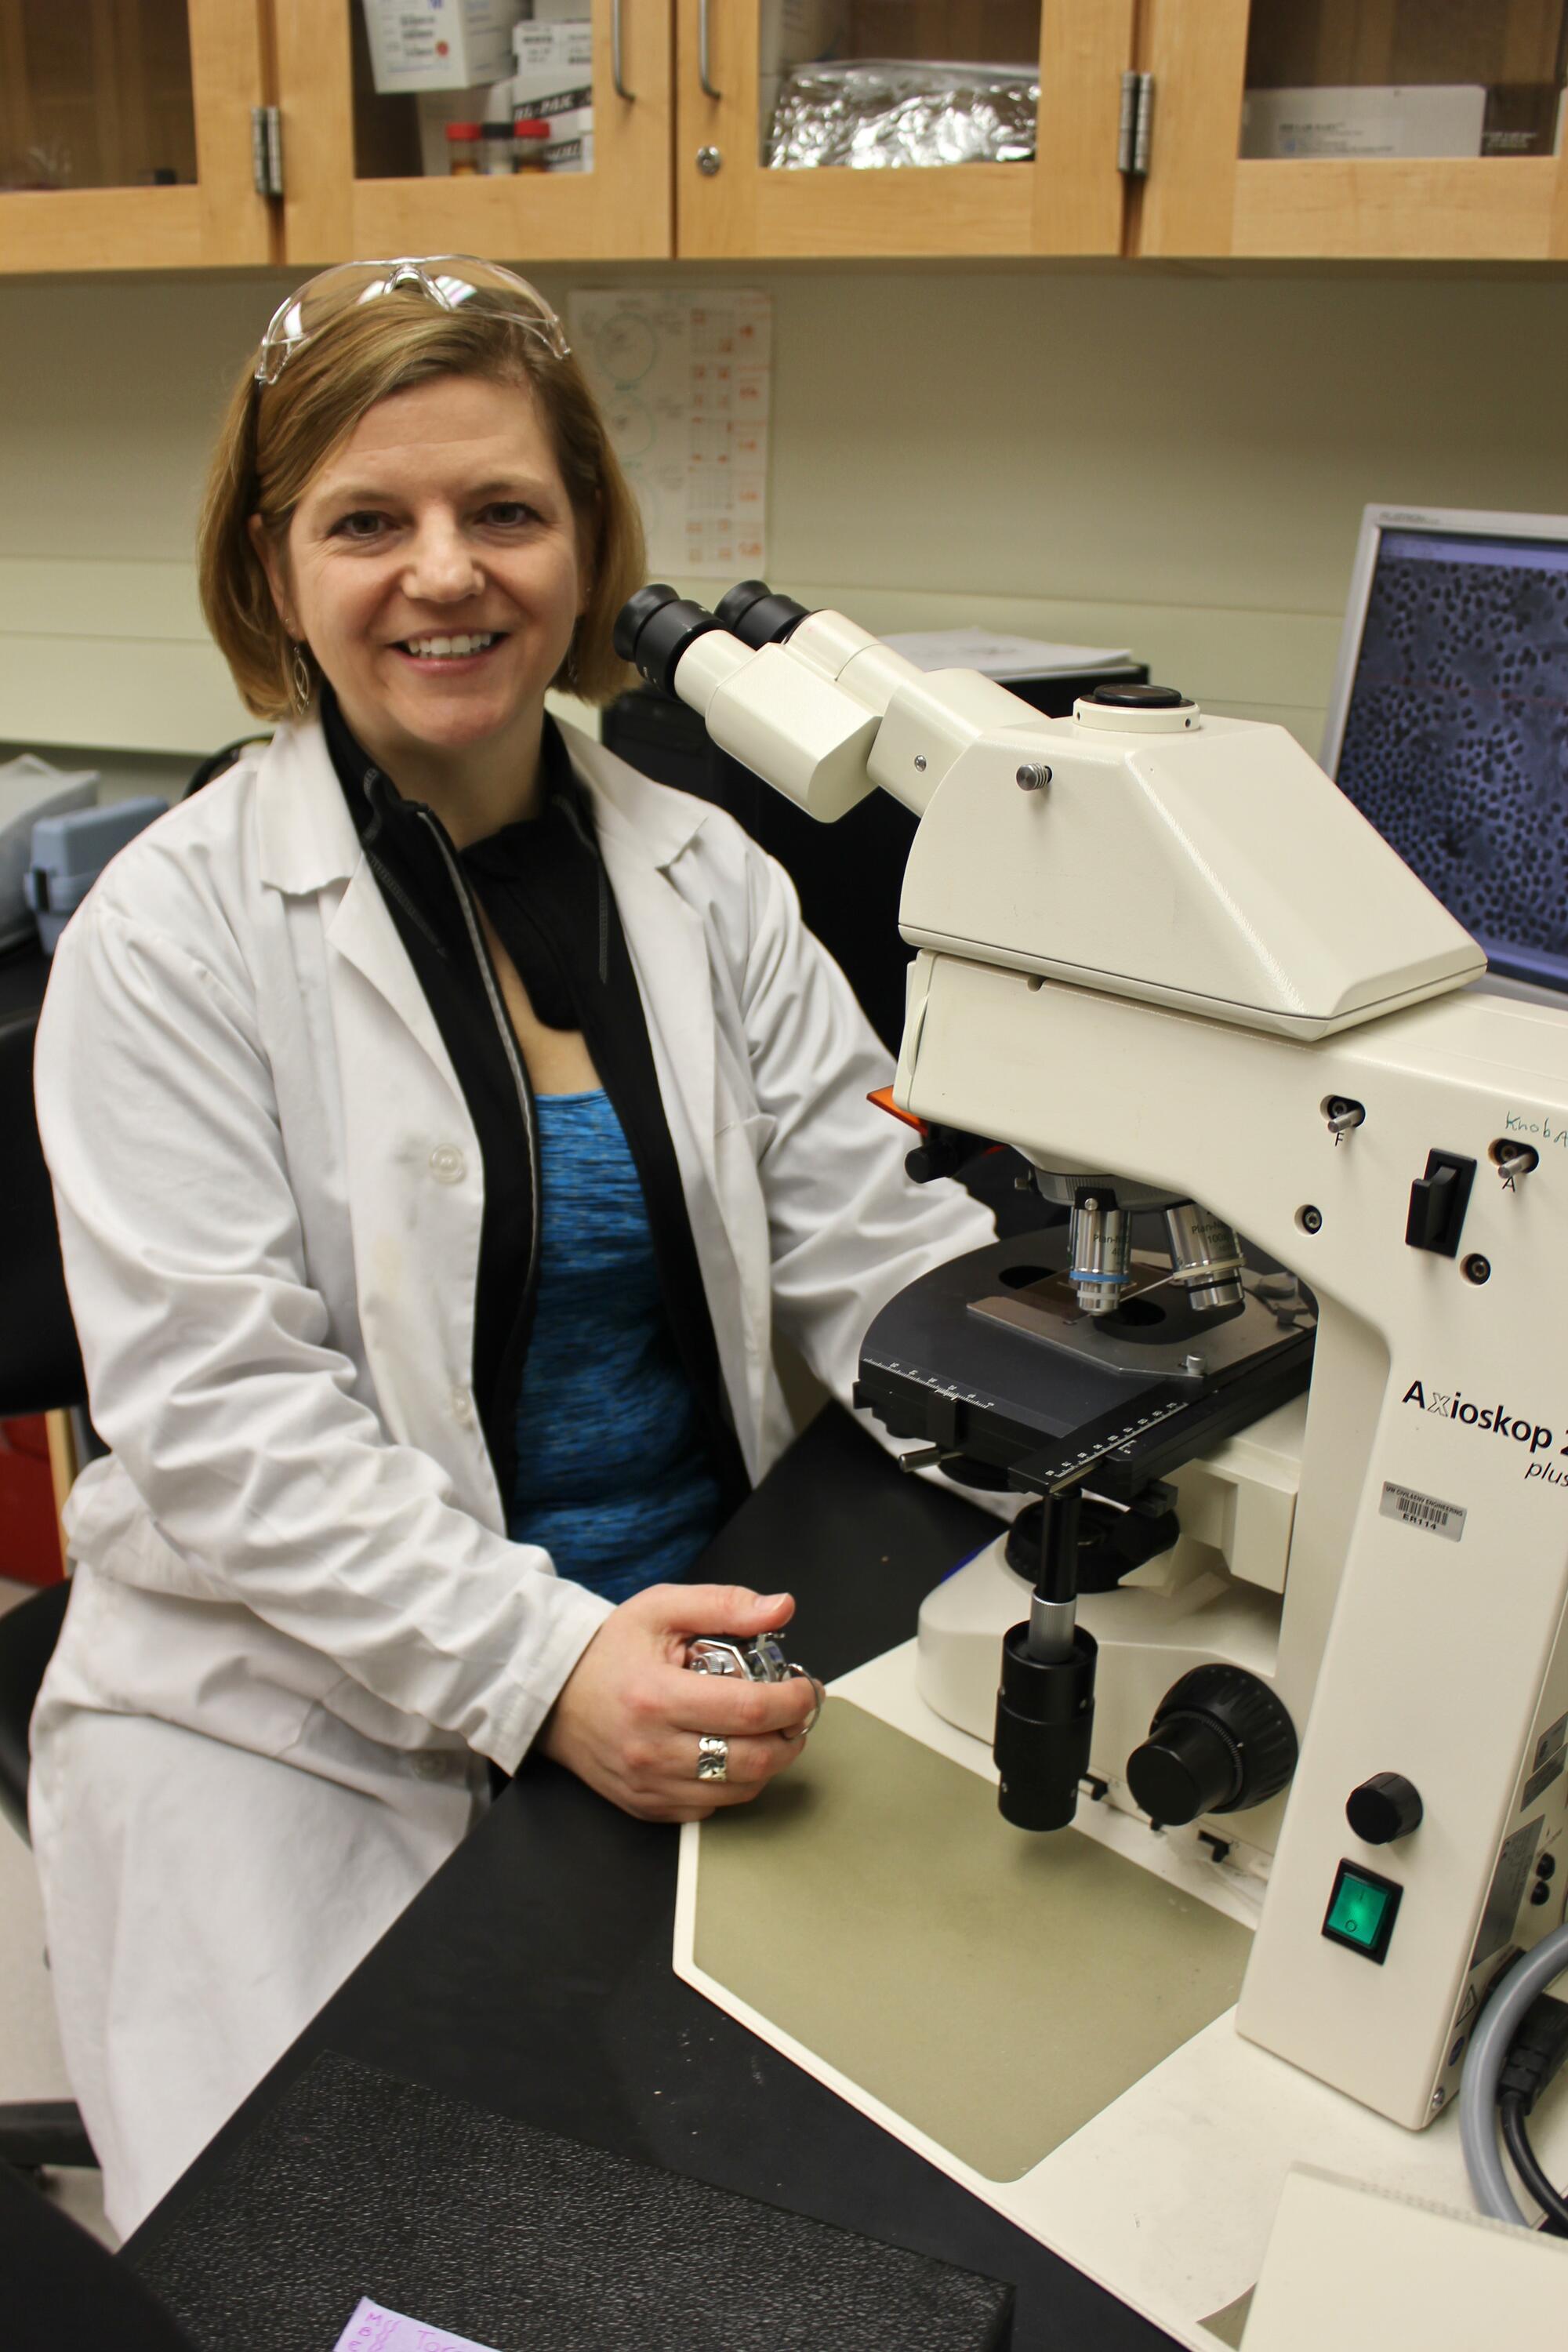 Professor Monica Emelko seated at a microscope.